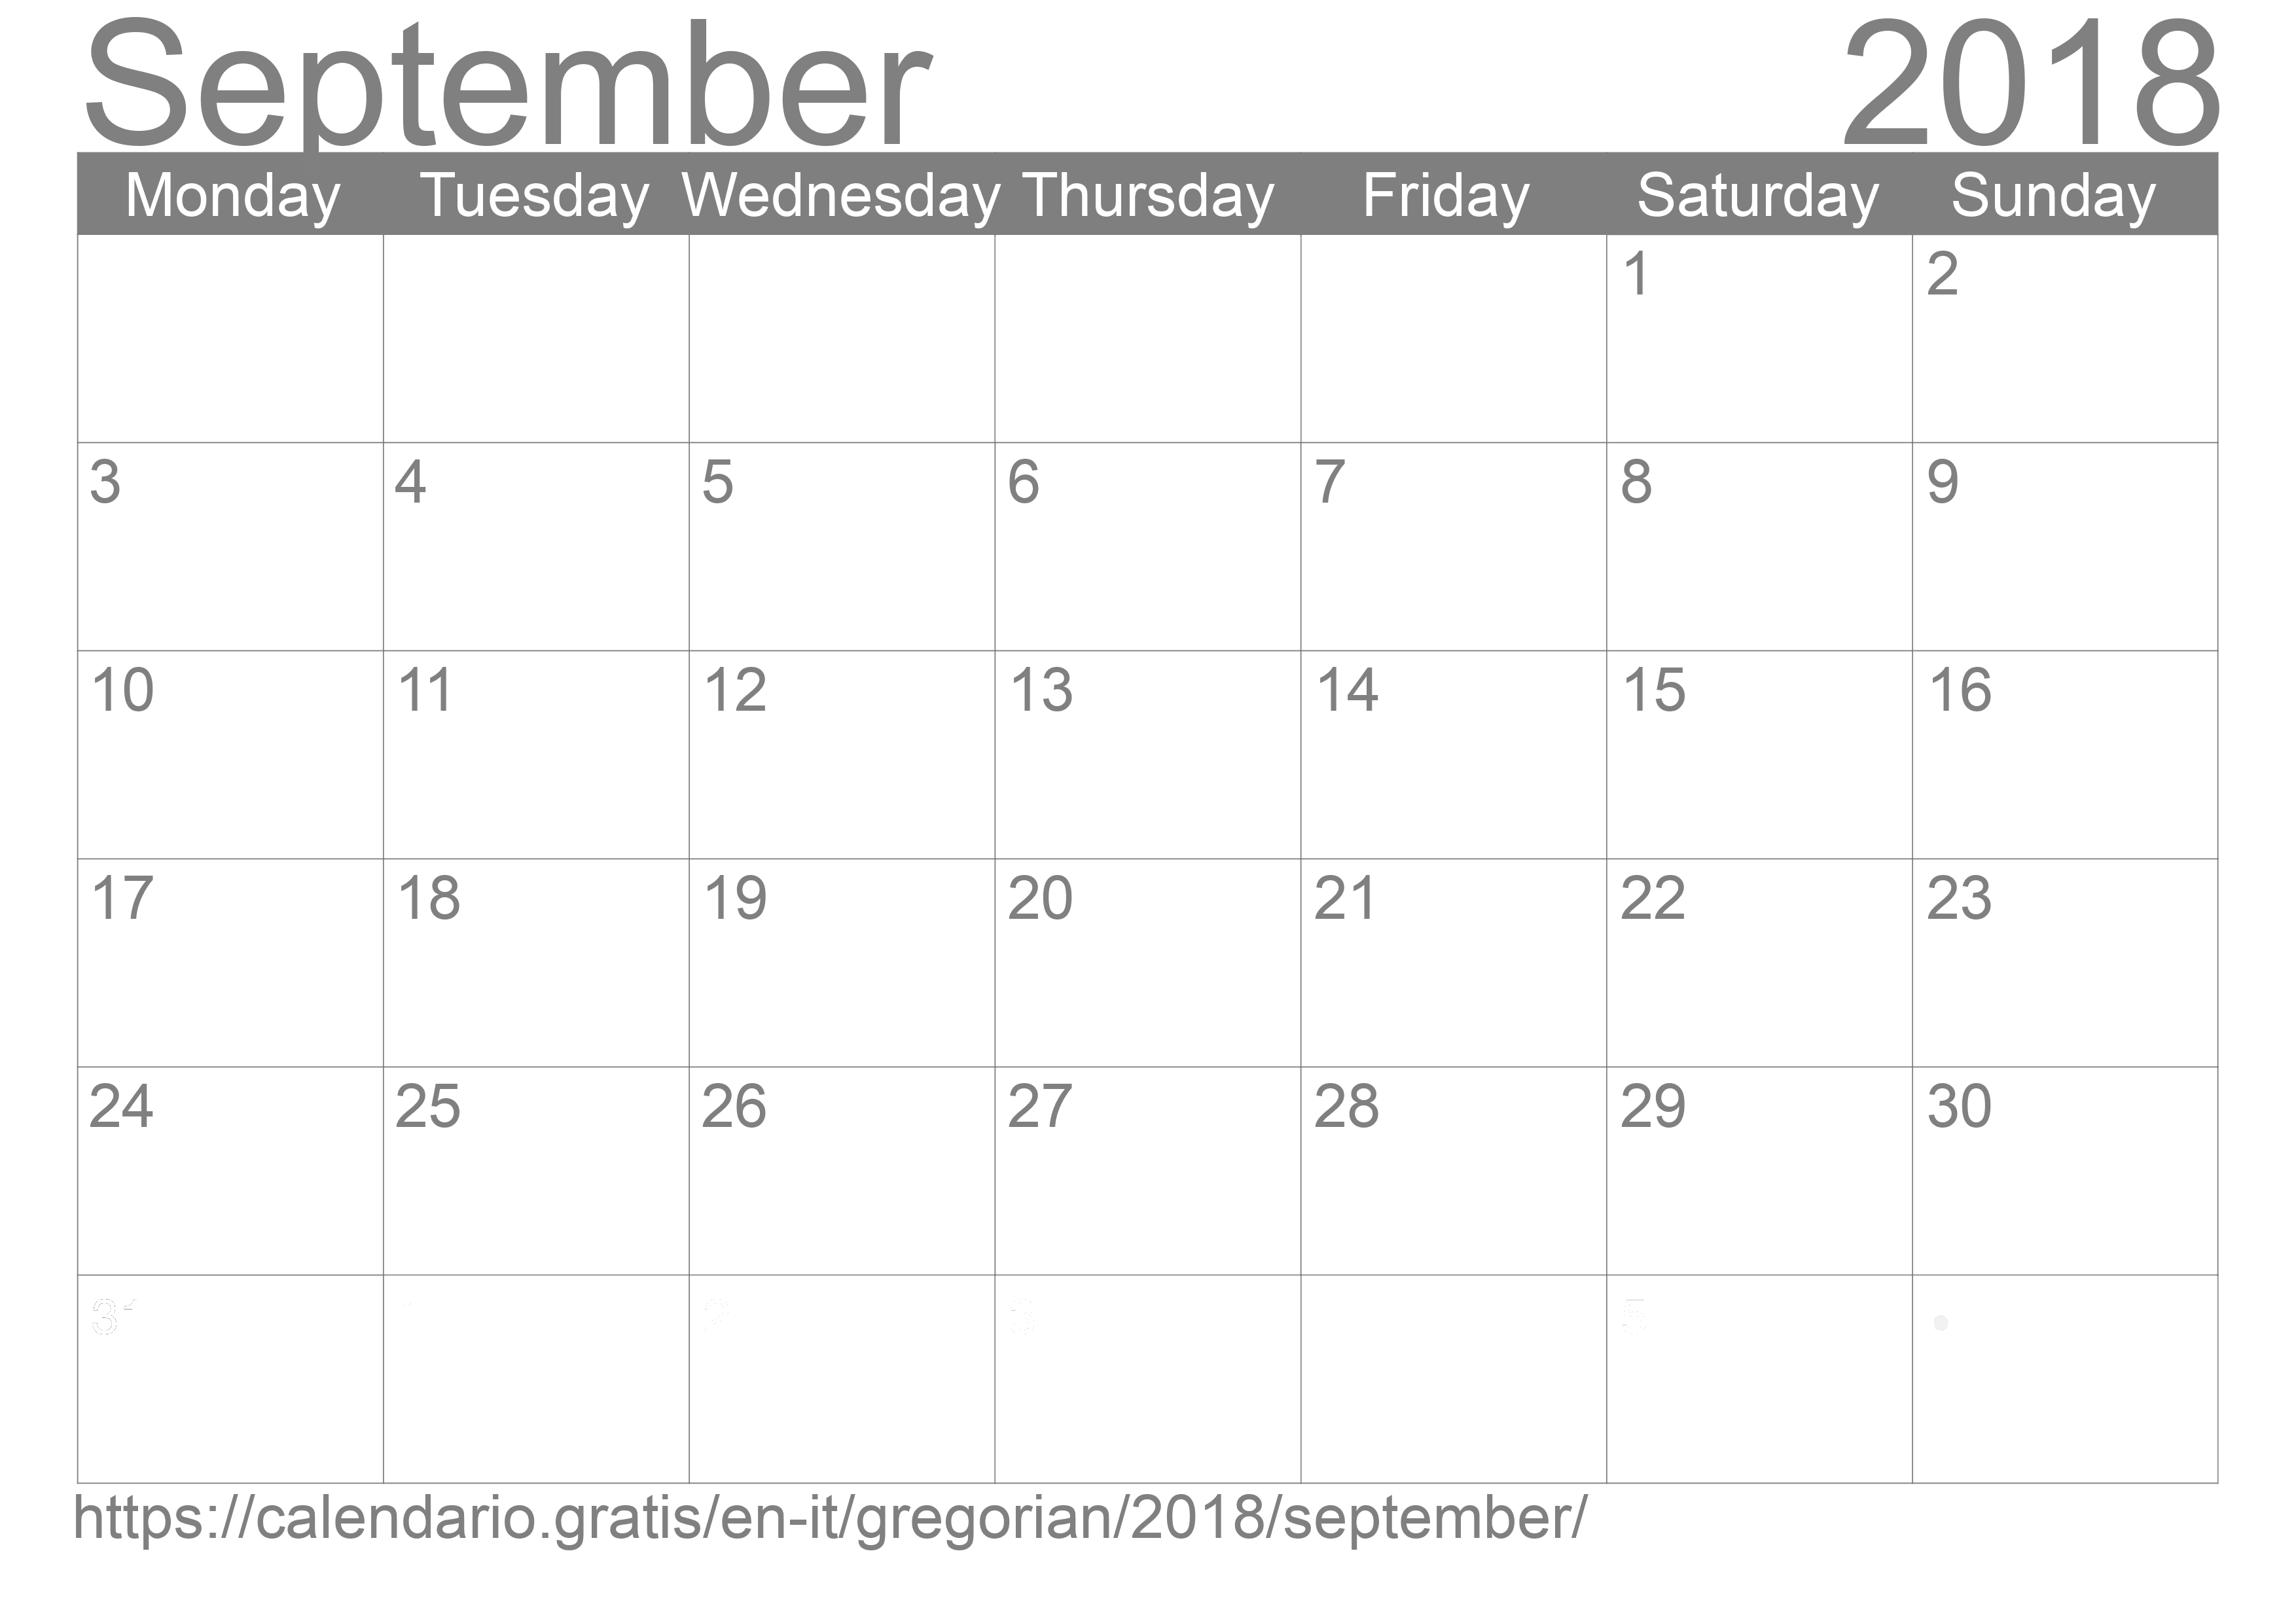 Calendar September 2018 to print